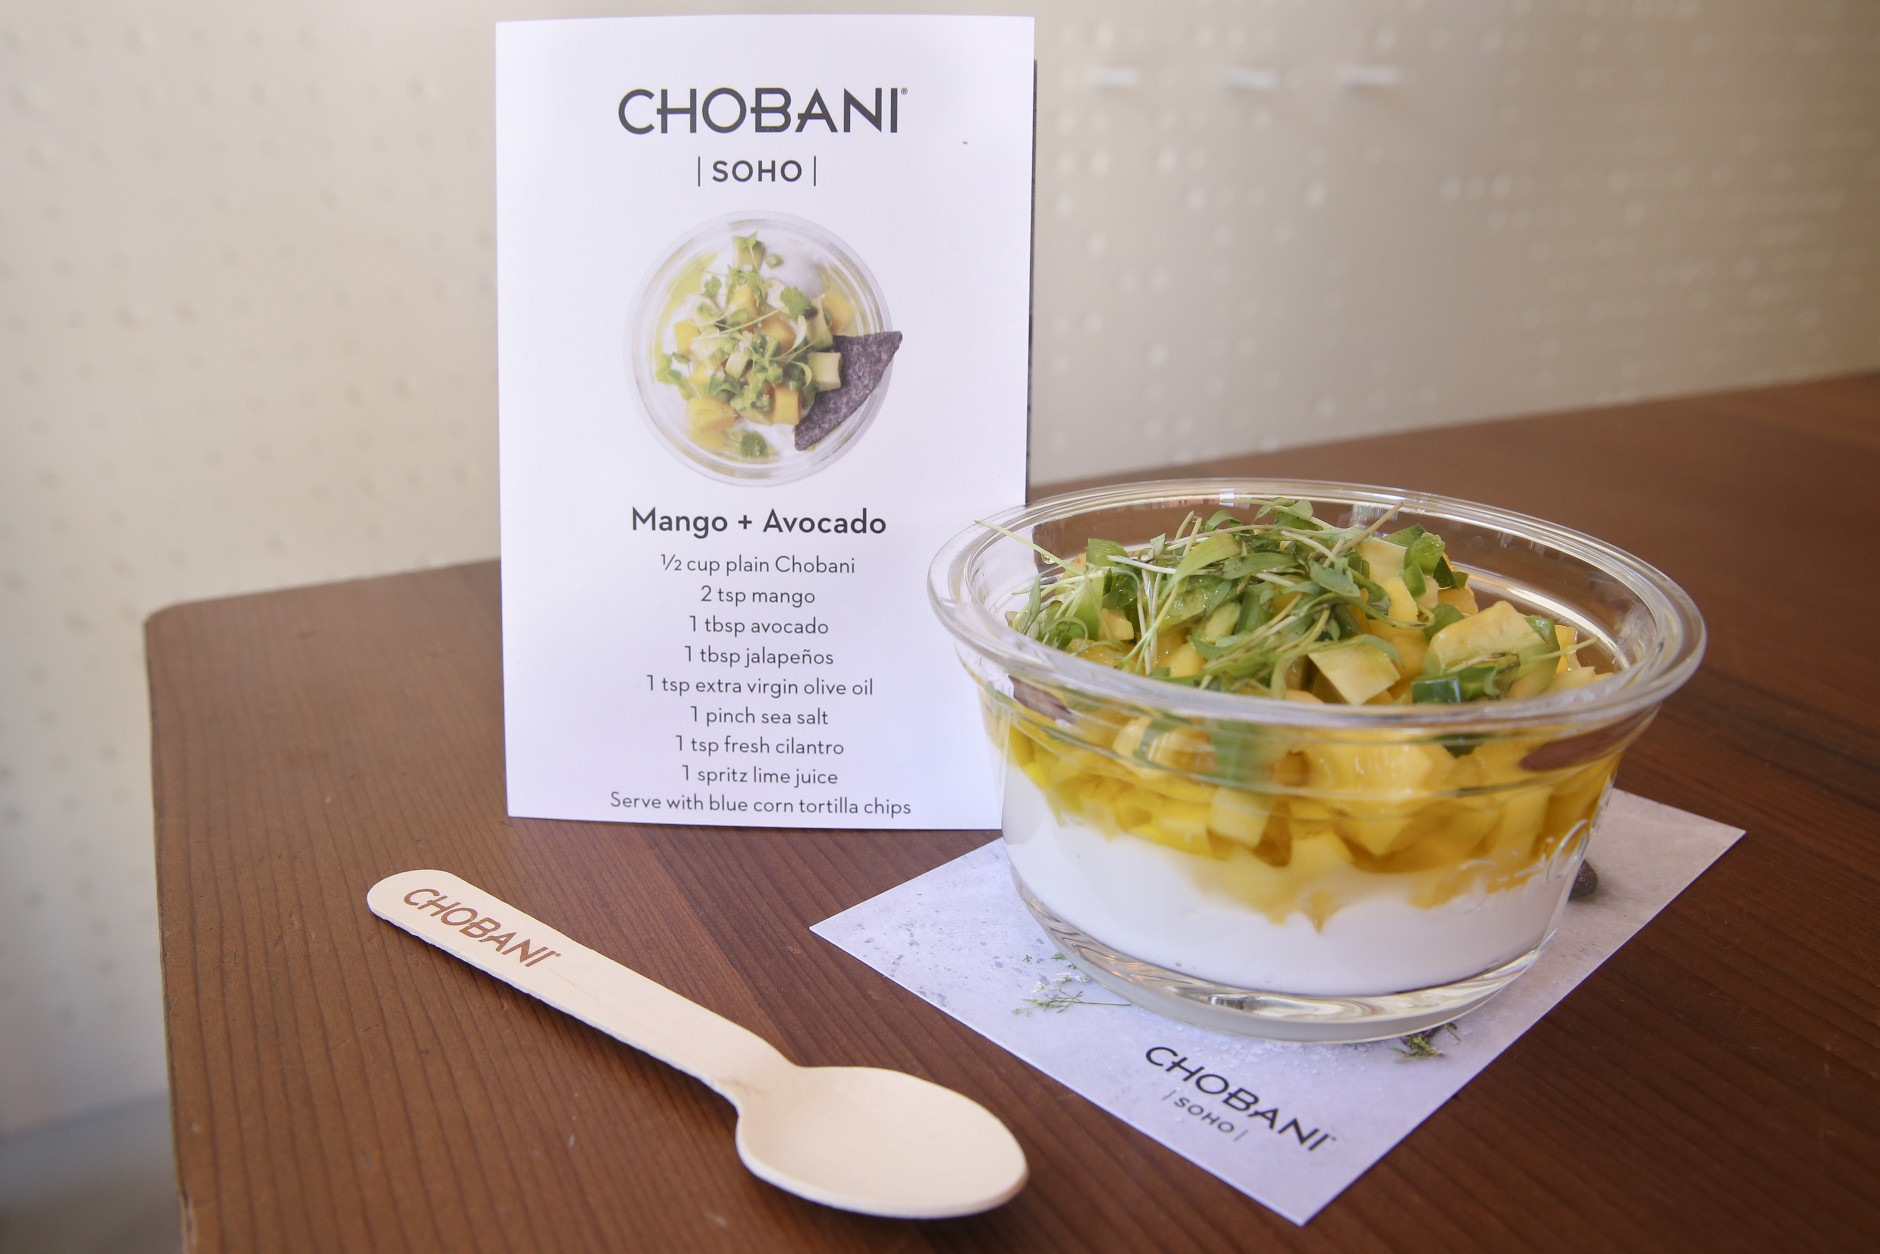 Mango + Avocado Savory Yogurt Creations offered at the Chobani SoHo Café on Thursday, April 24, 2014, in New York. (John Minchillo/AP Images for Chobani)